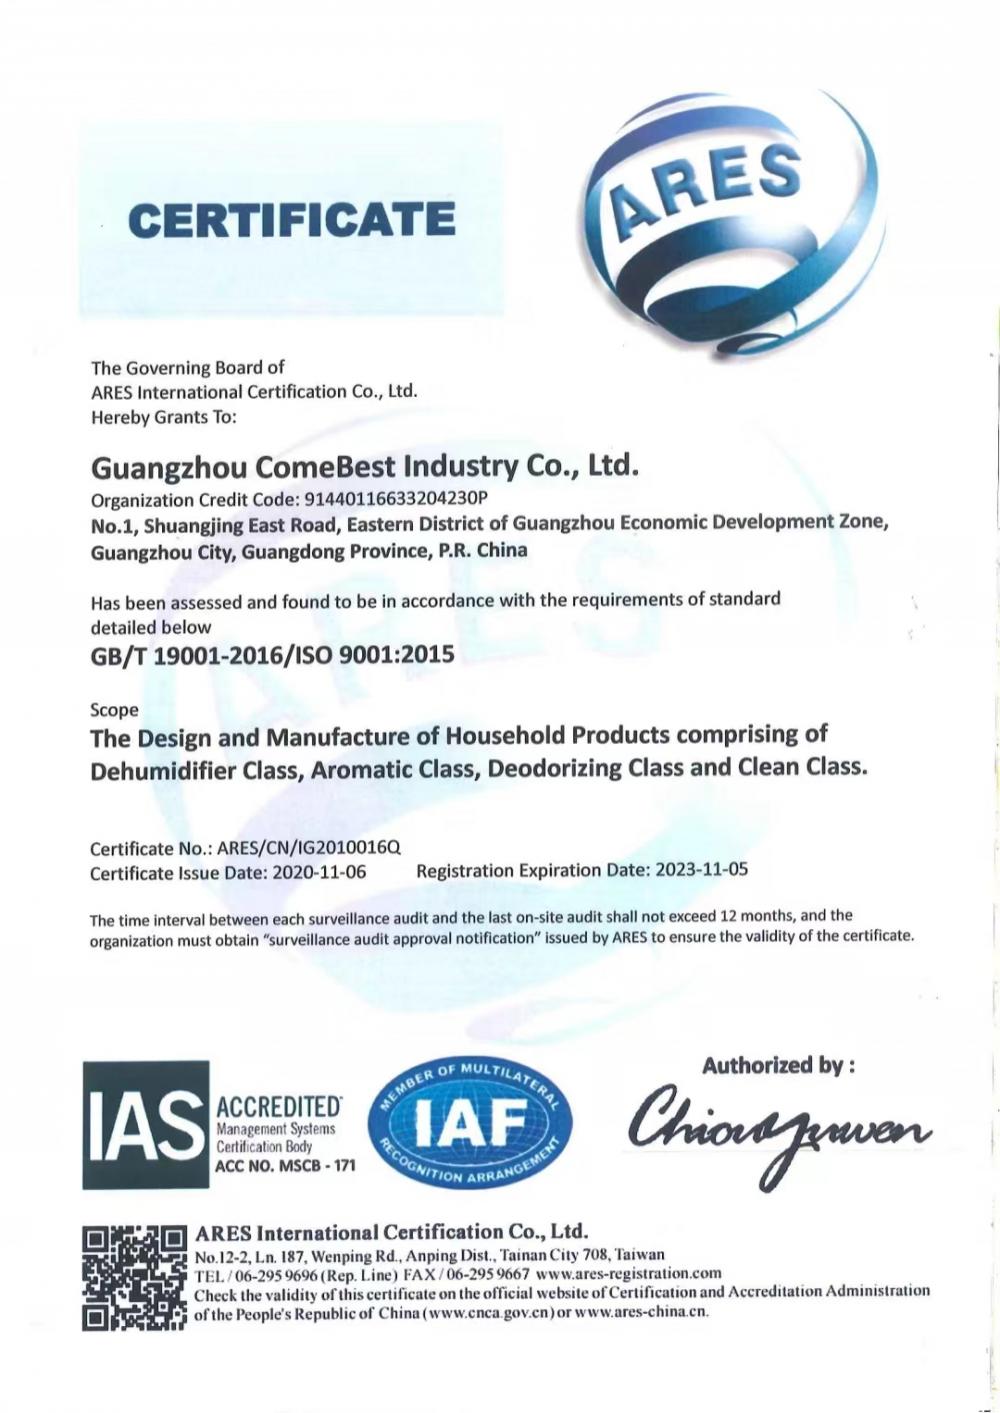 GB/T 19001-2016/ISO 9001:2015